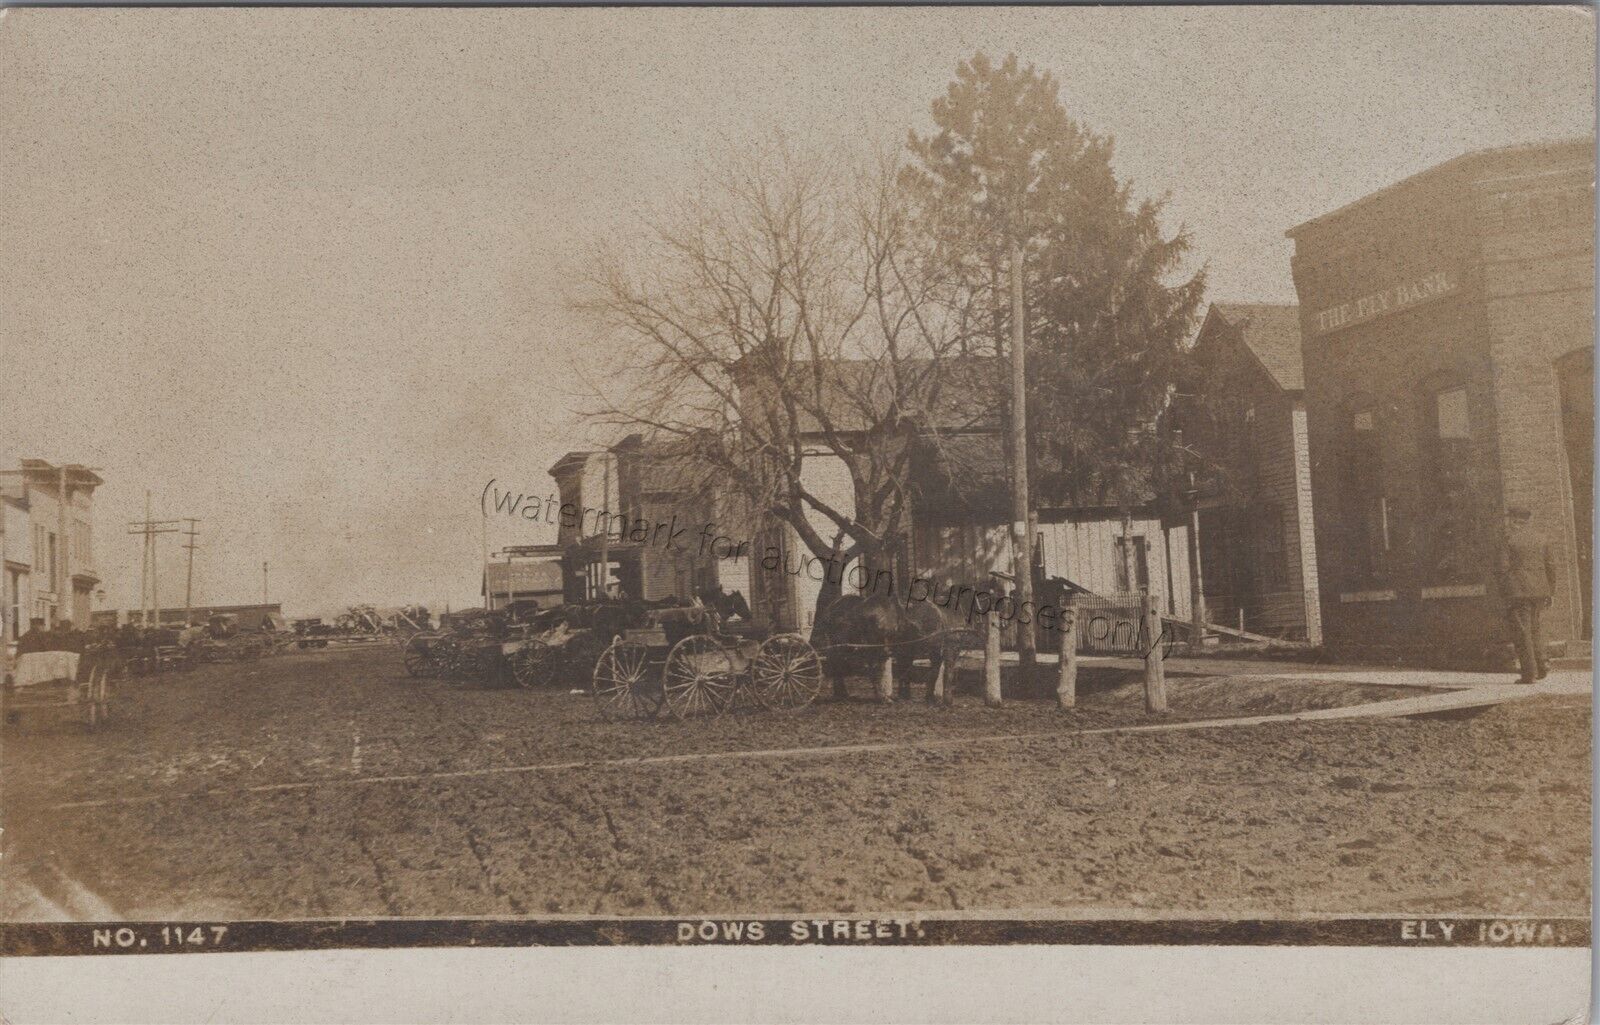 Ely, IA: RPPC Dows Street, horses, Vintage Linn County, Iowa Real Photo Postcard